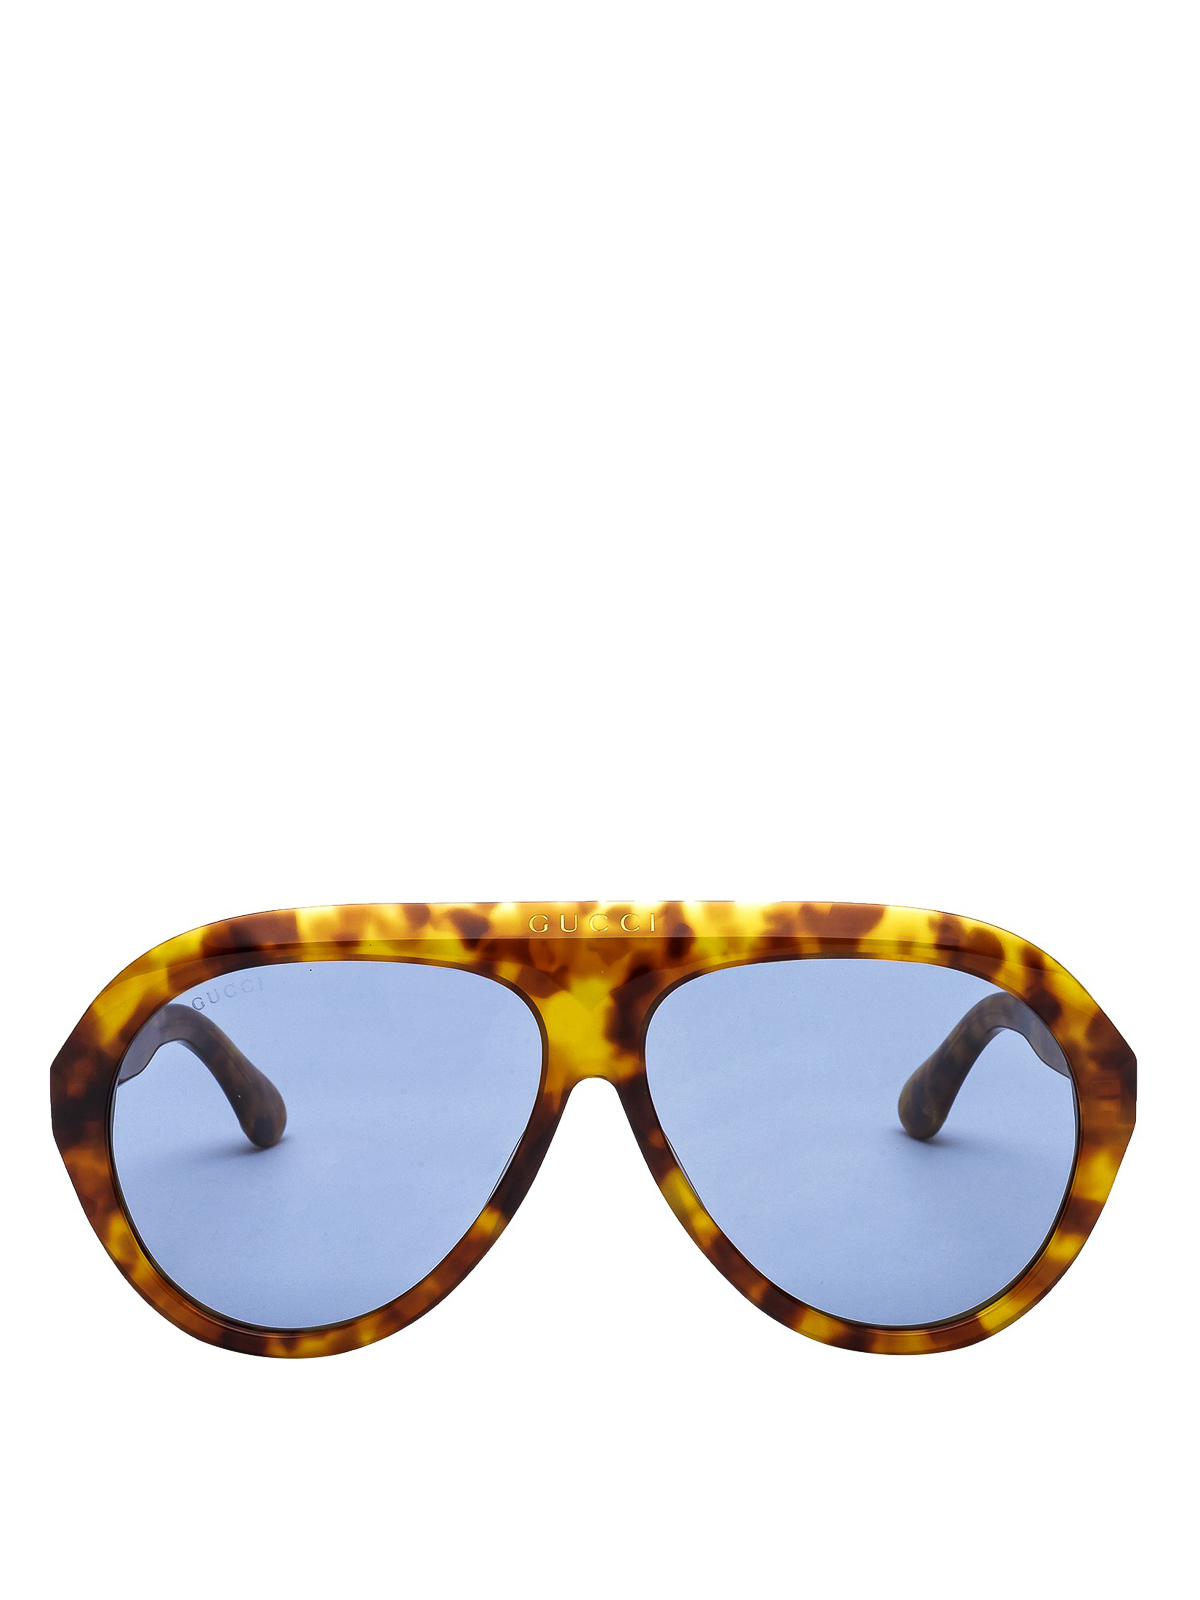 Theseus de eerste Durf Sunglasses Gucci - Aviator style sunglasses - GG0479S004 | iKRIX.com